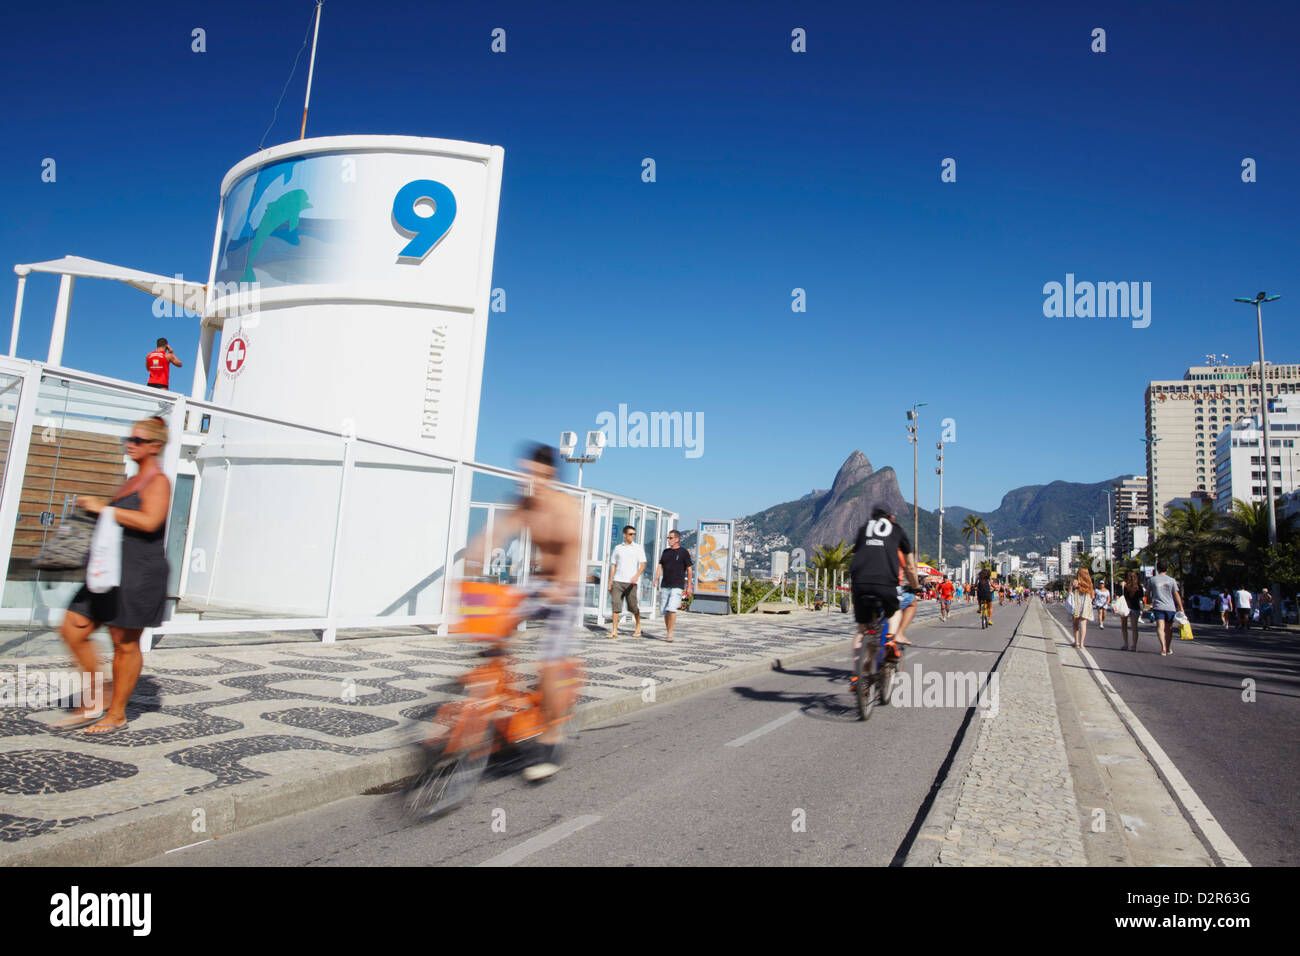 People cycling and walking along pedestrianised street on Sunday, Ipanema, Rio de Janeiro, Brazil, South America Stock Photo